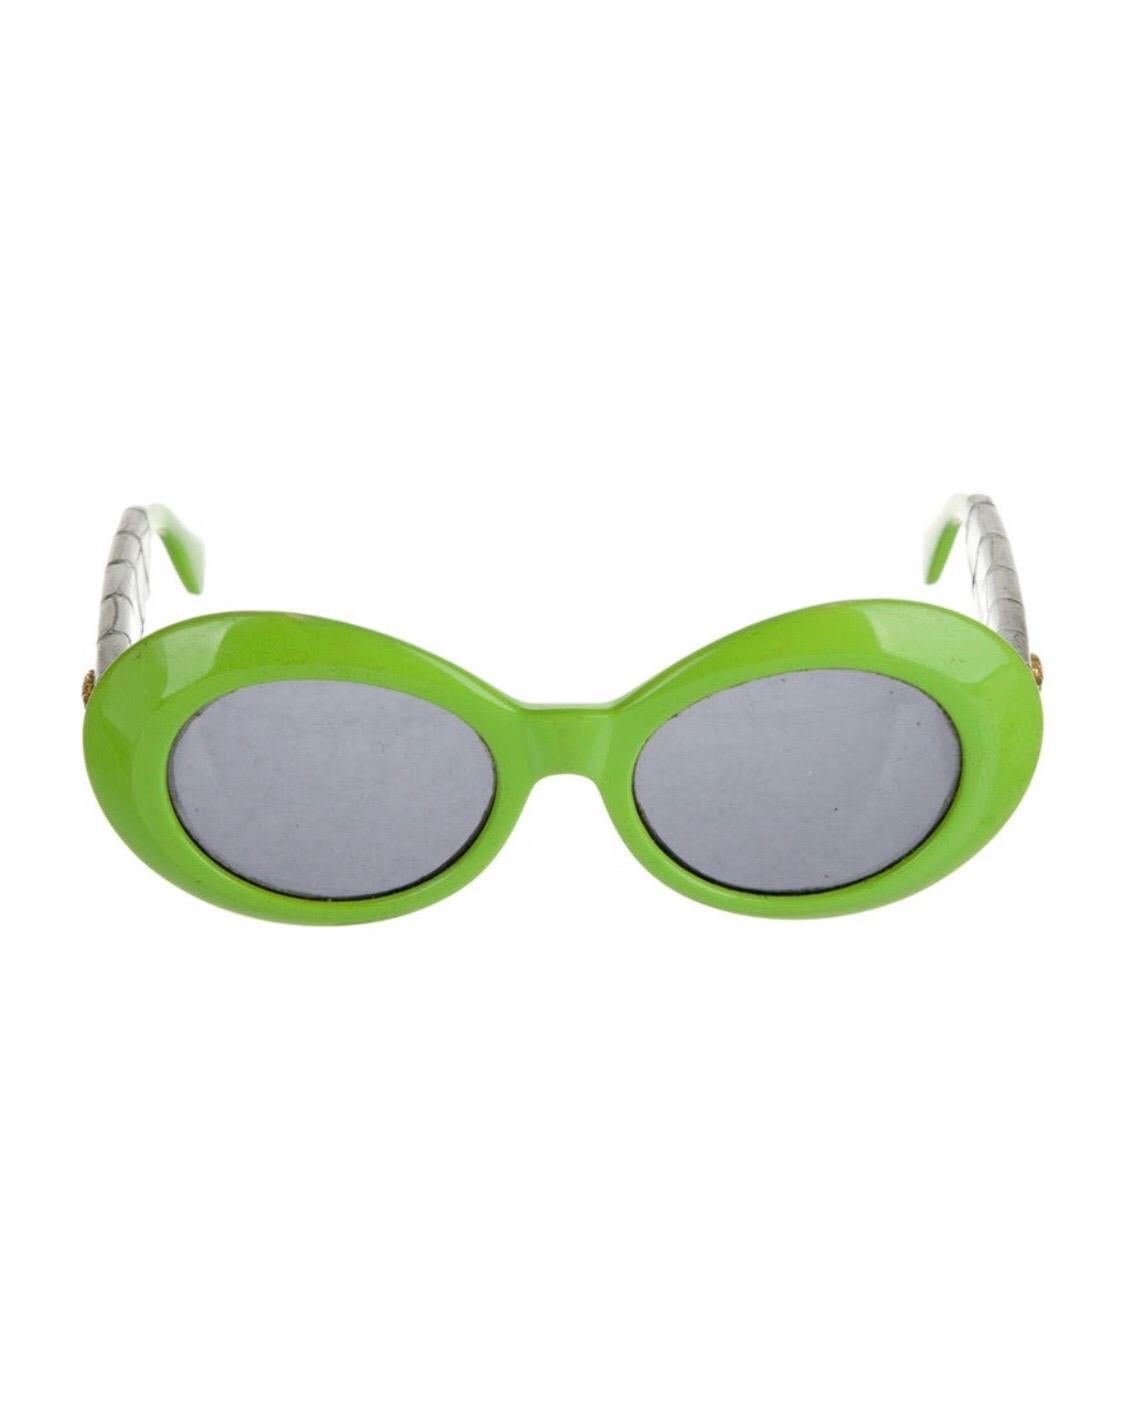 Gianni Versace Lime Green Oval Sunglasses 1